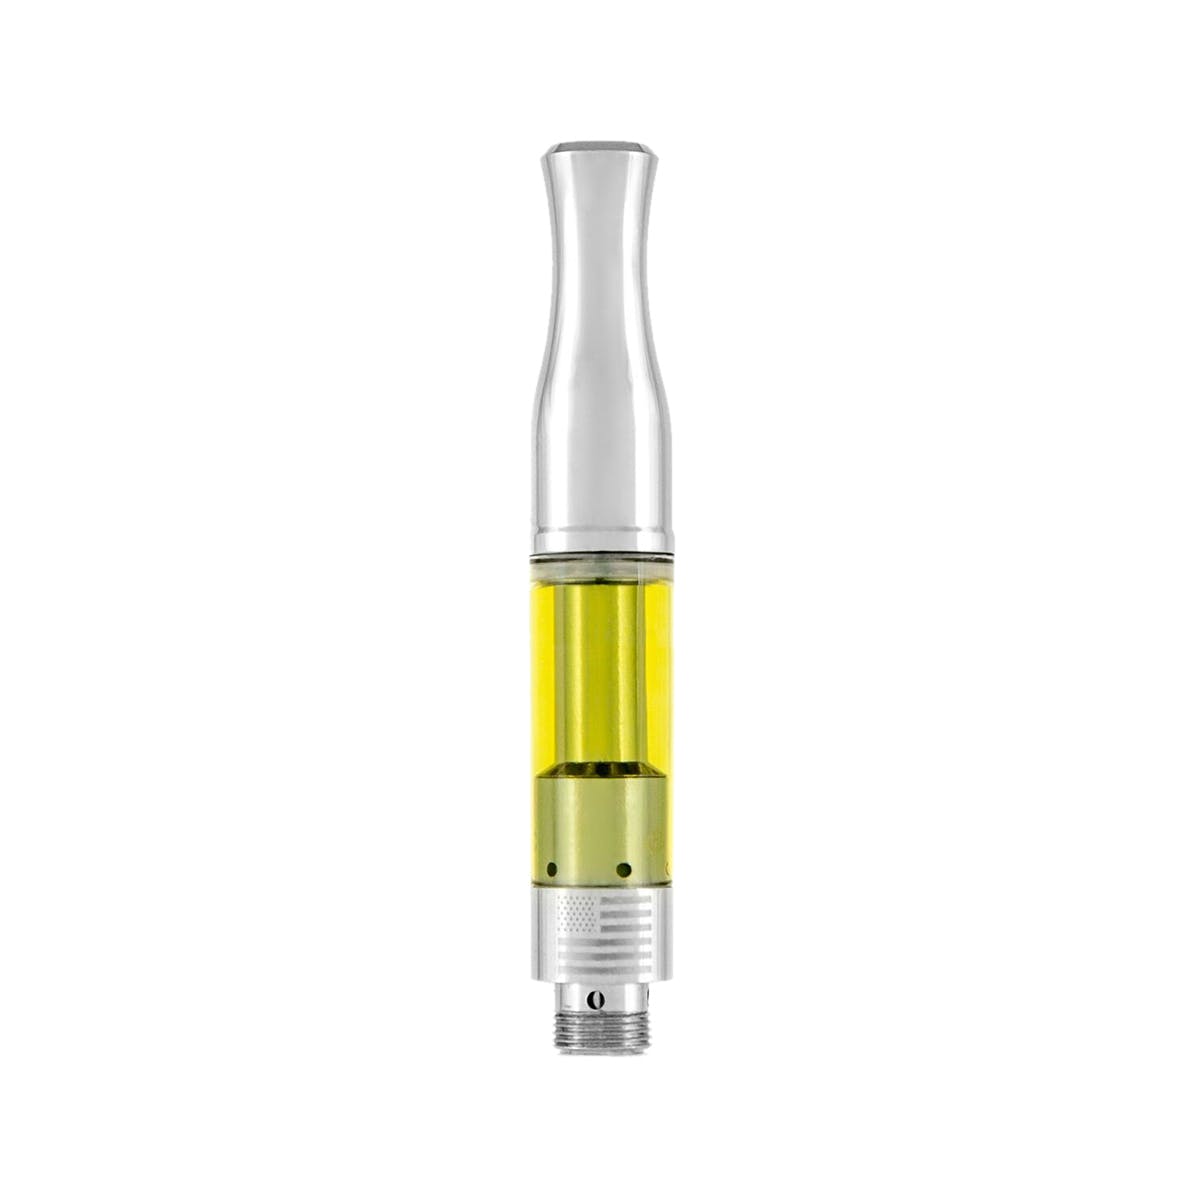 70/30 Sativa Distillate C-cell Technology Vaporizer Cartridge